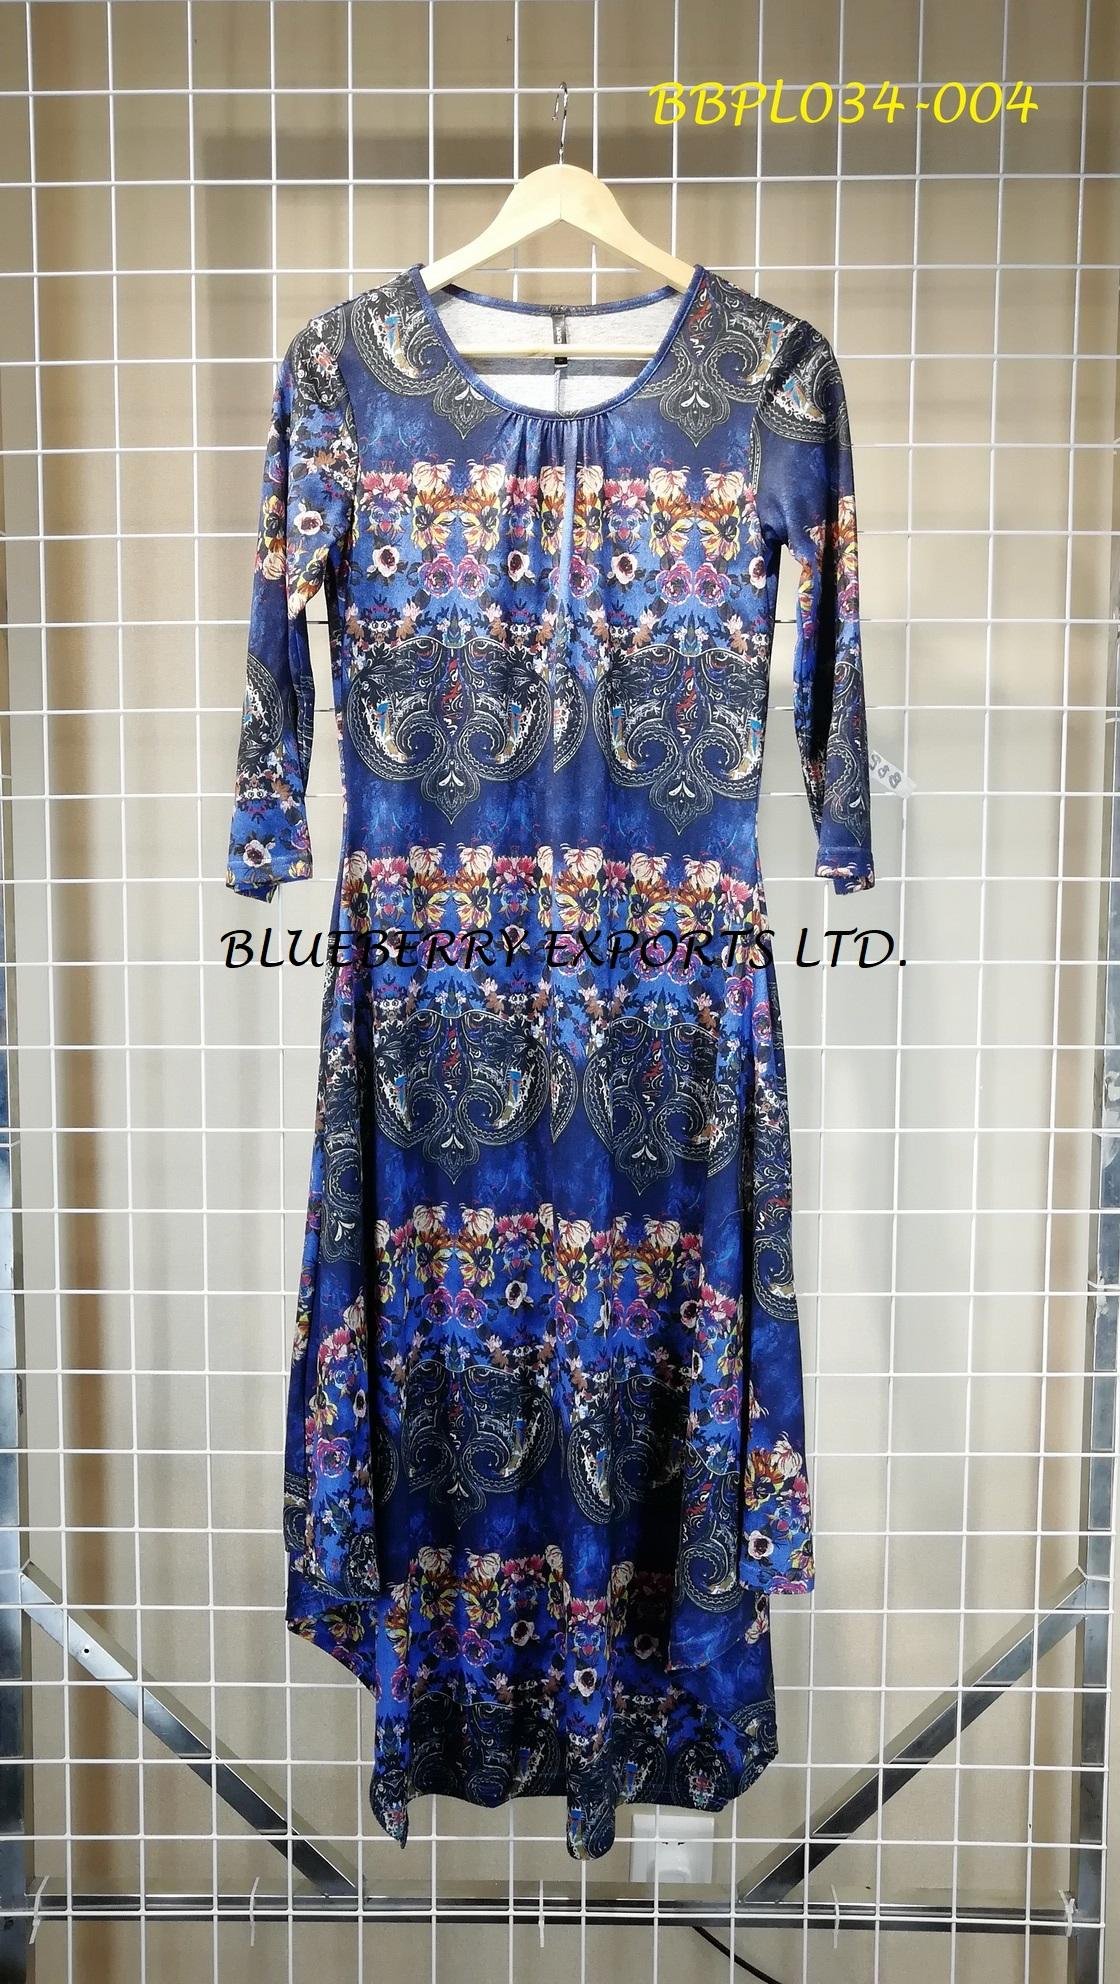 Winter Tunic dress with pattern design #BBPL034-004